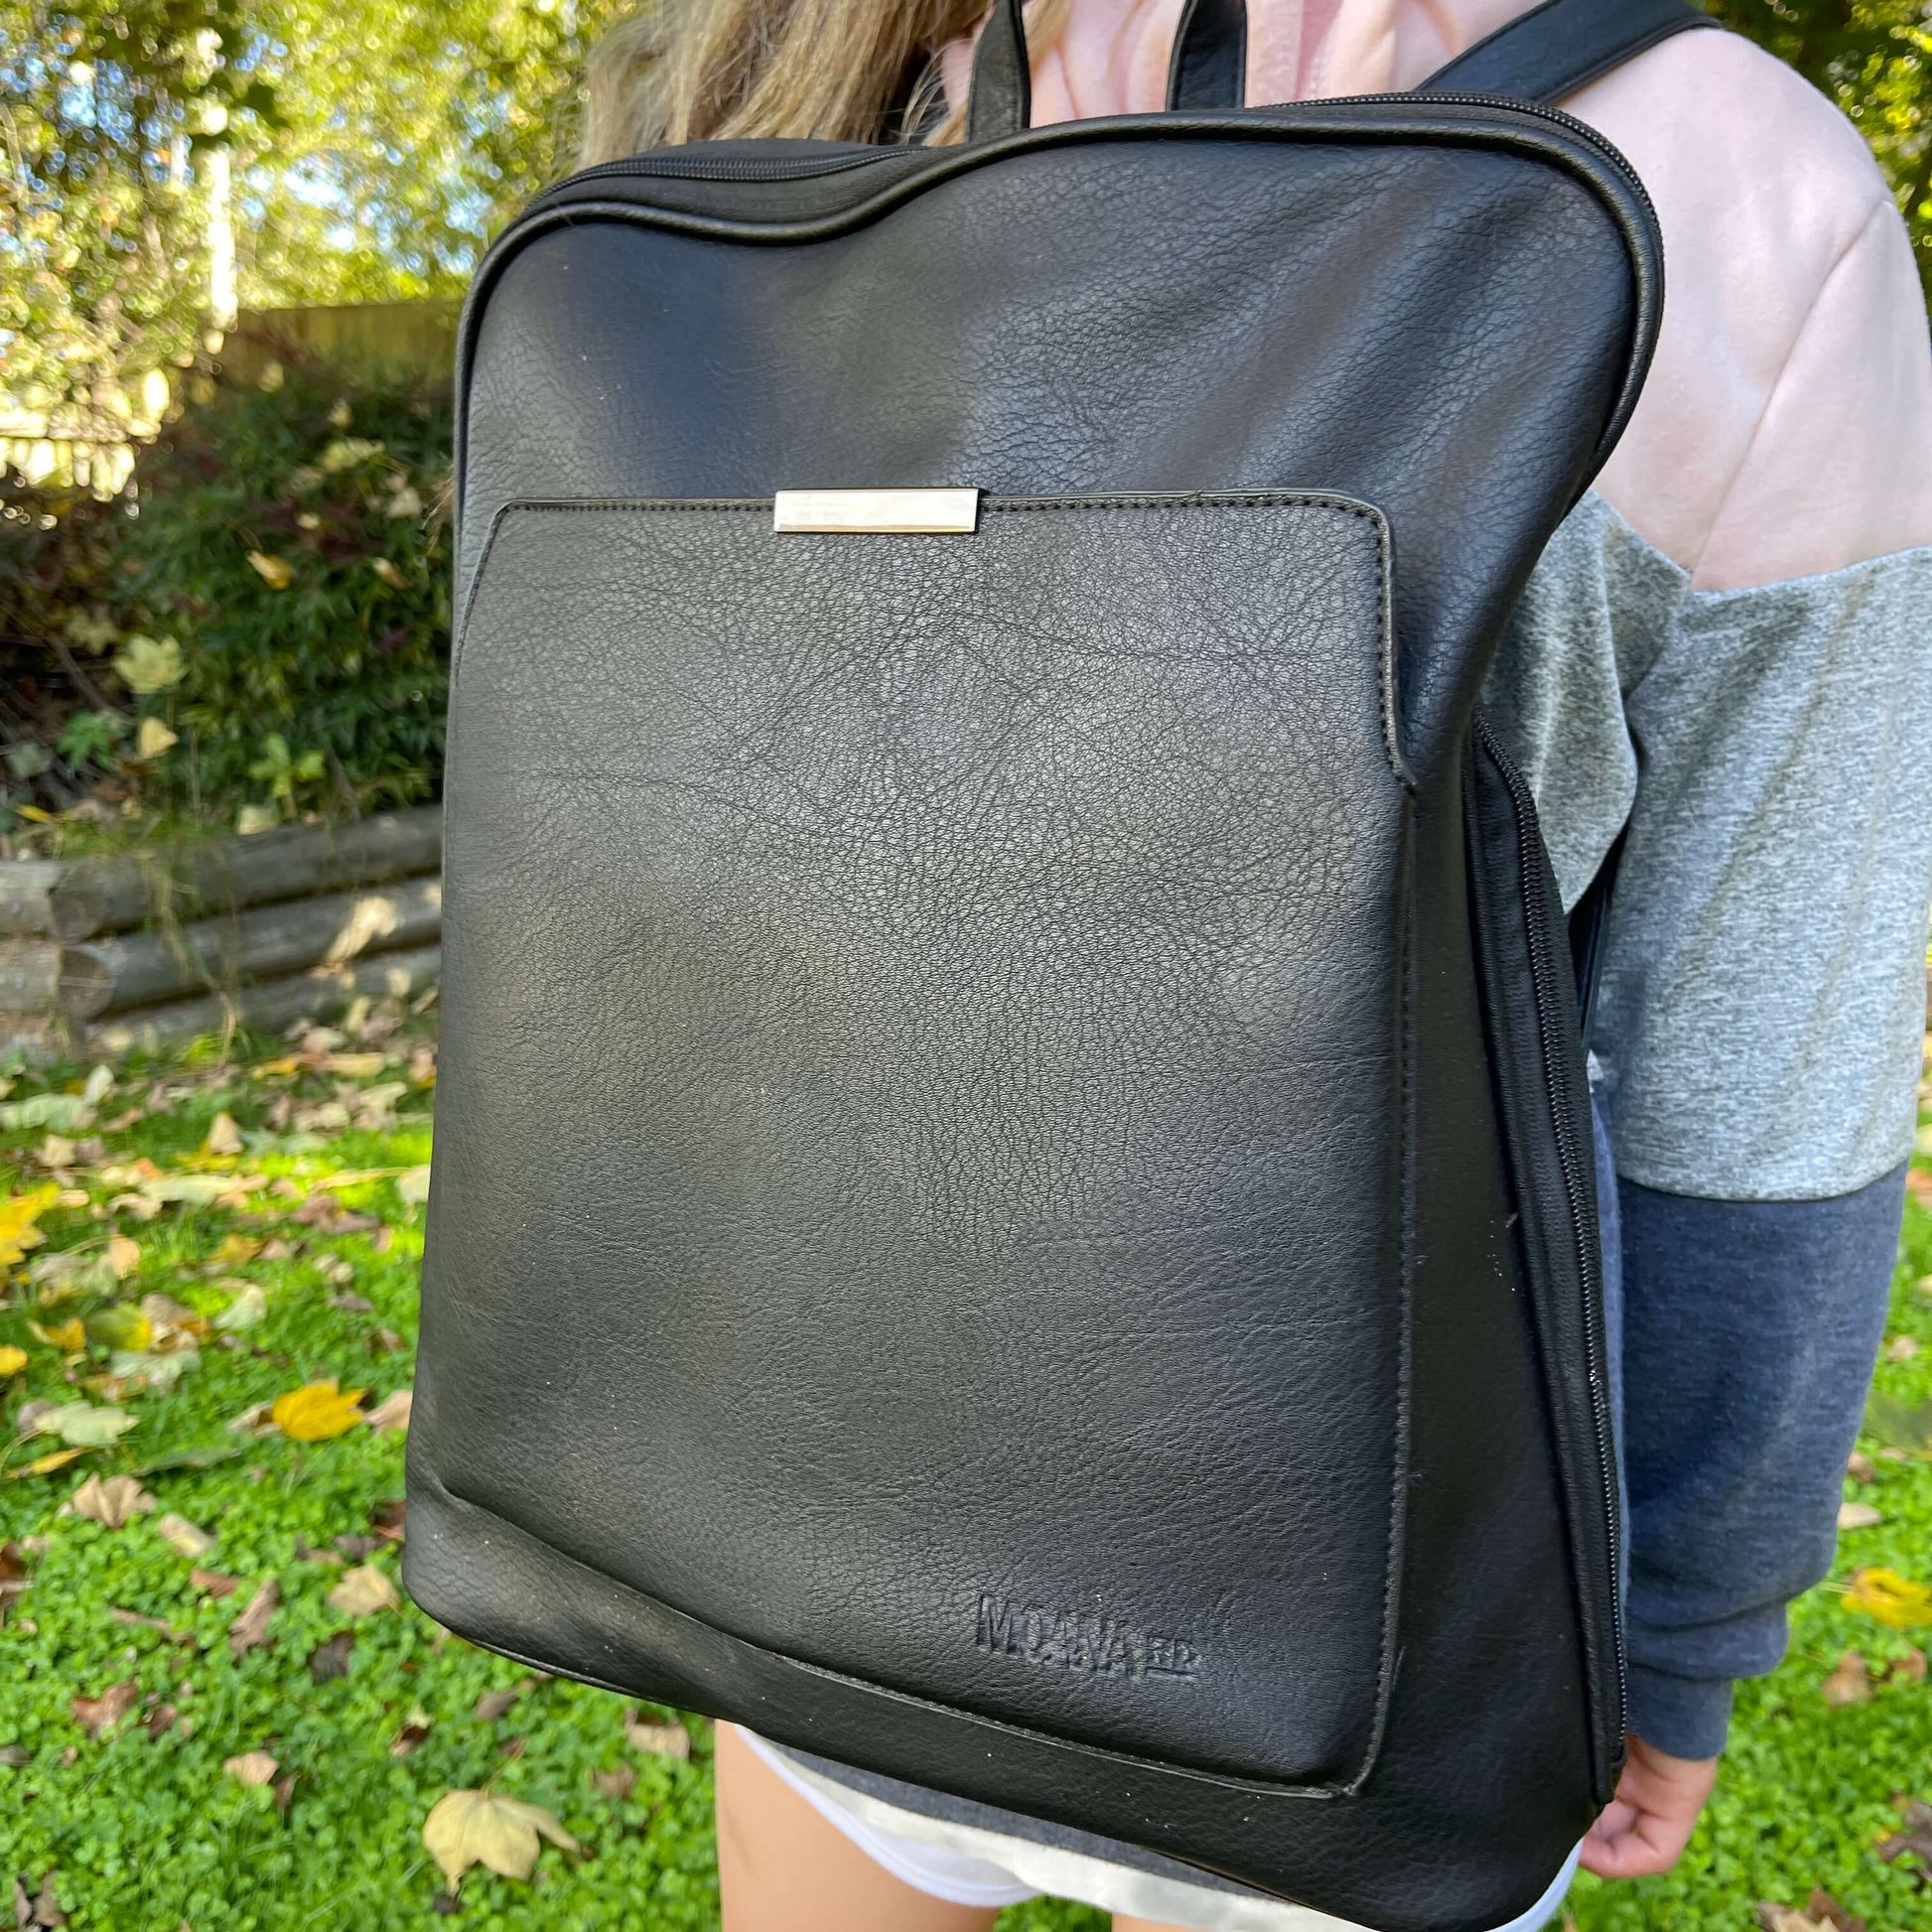 Girl wearing leather look black backpack.